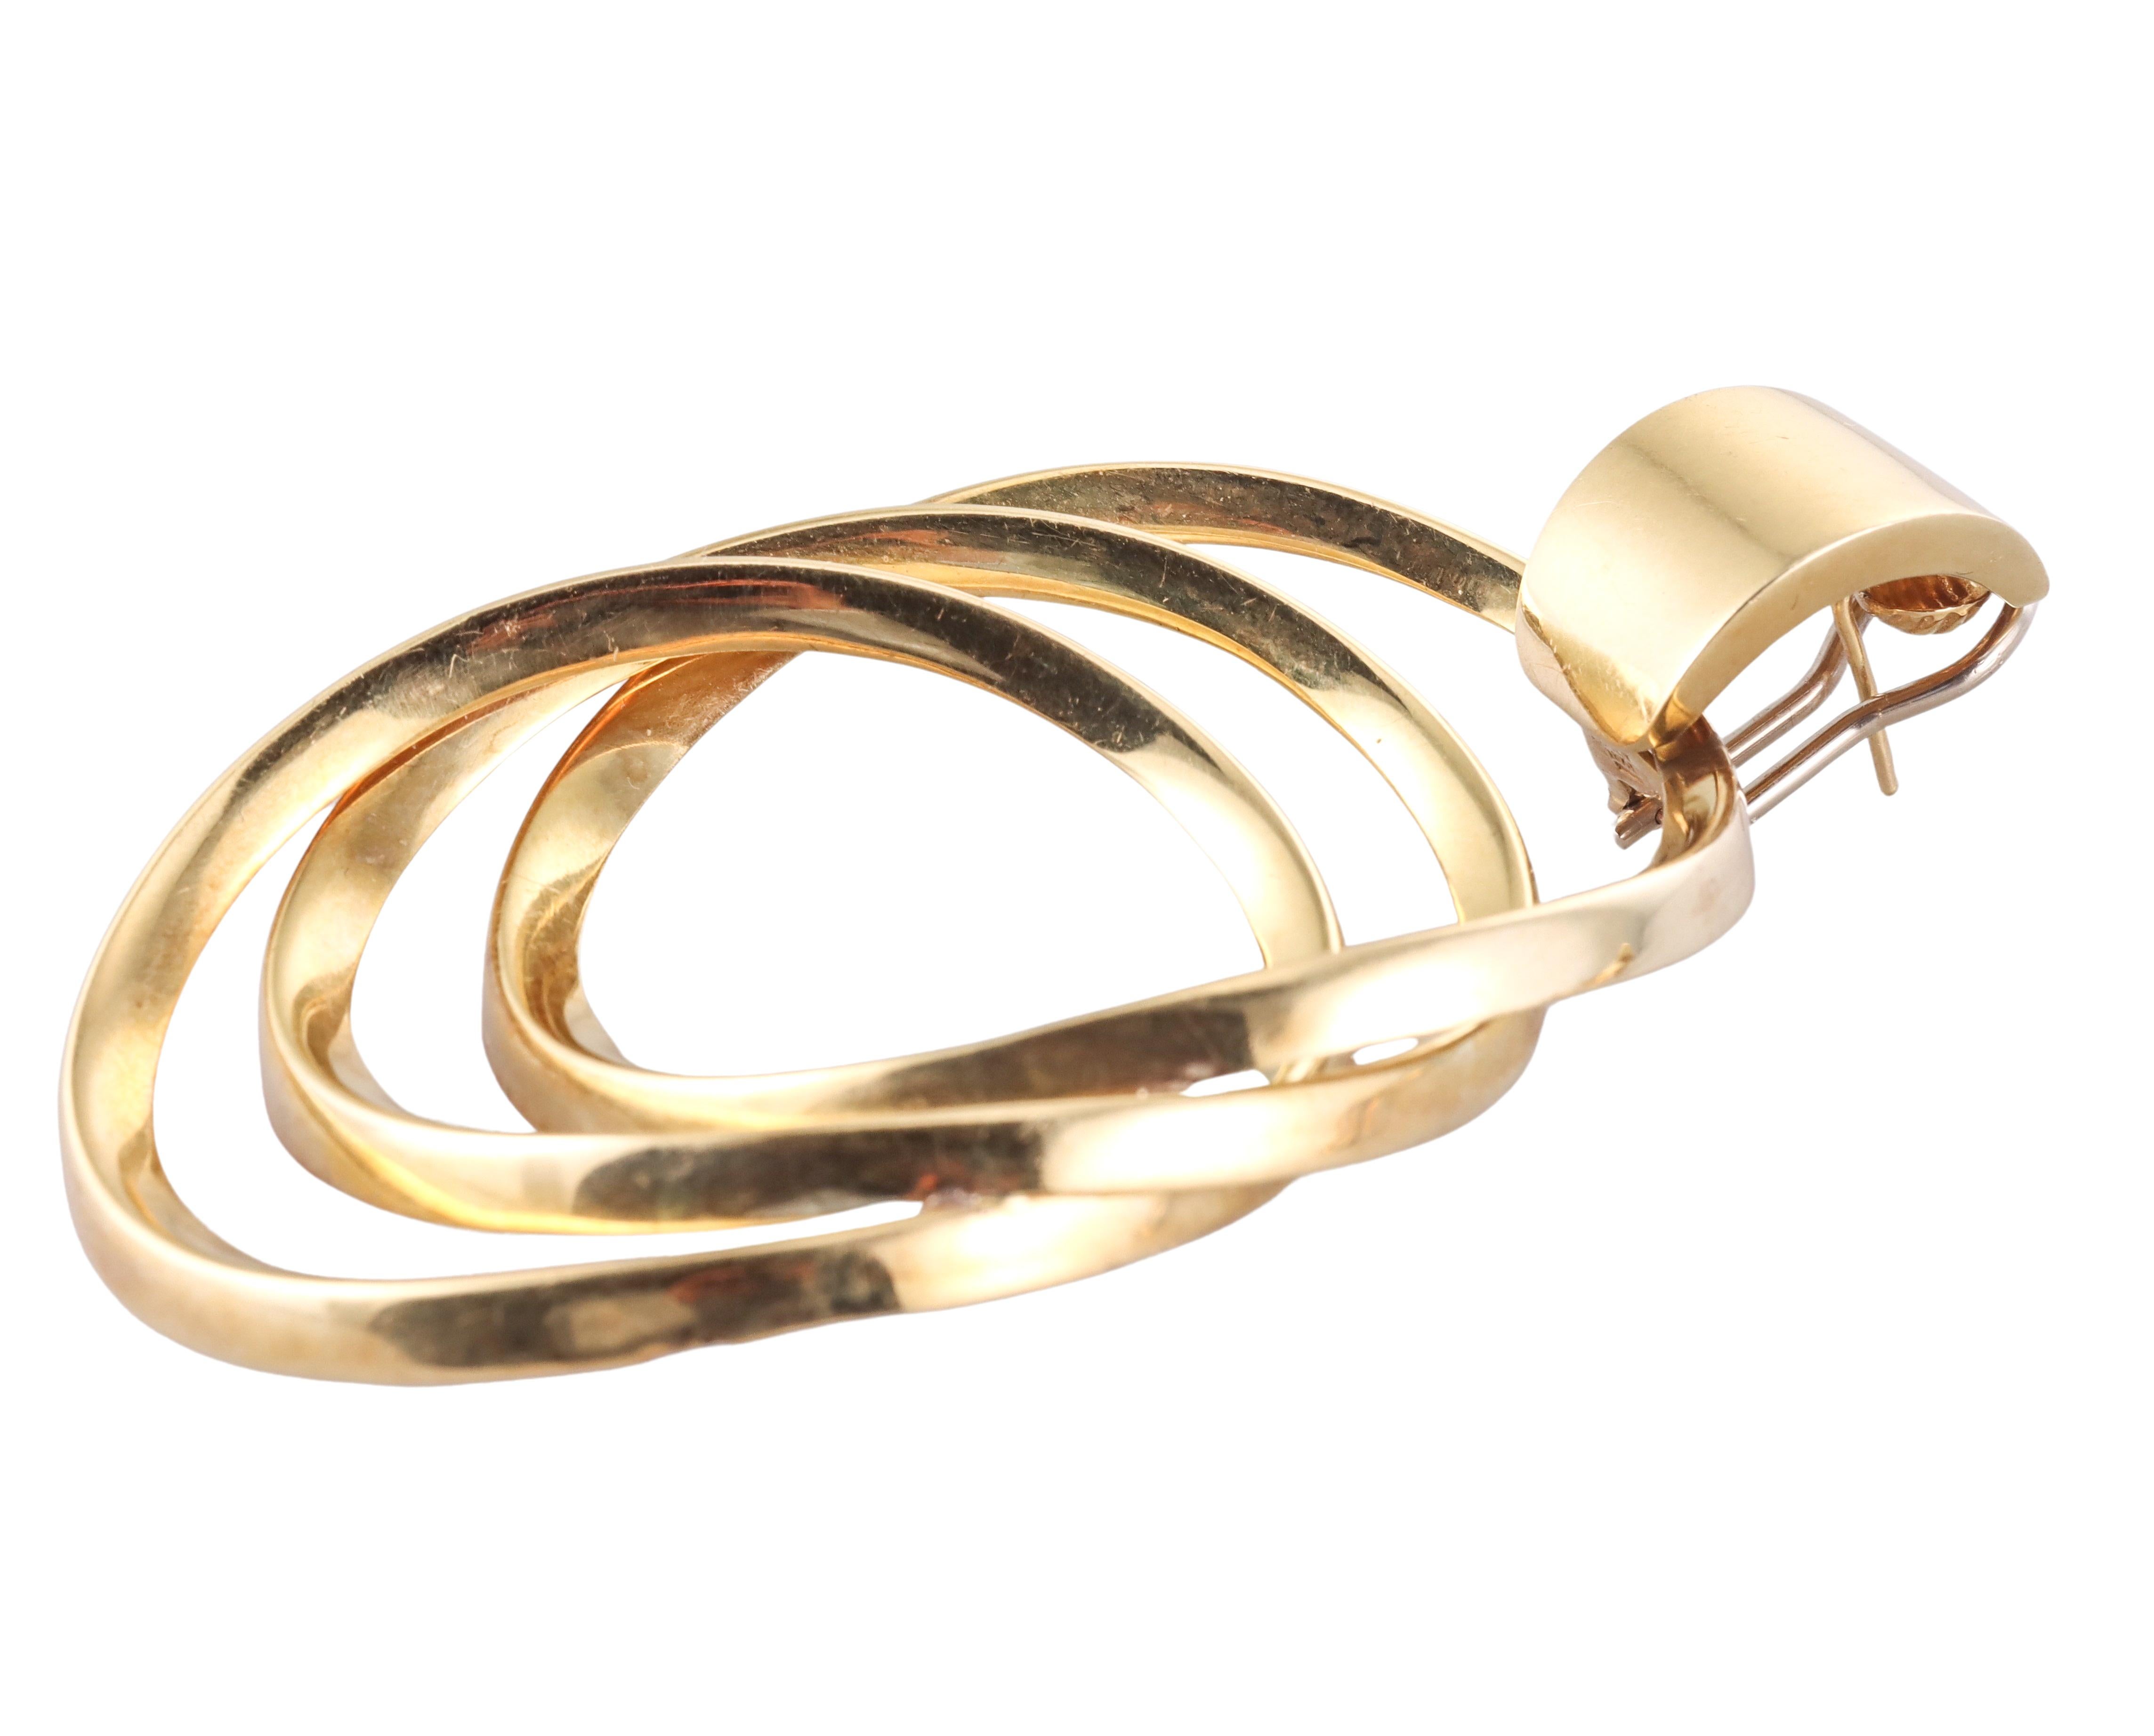 Whimsical circa 1980s 18k gold Italian made earrings, featuring three interlocked circles.  The earrings measure 3.25